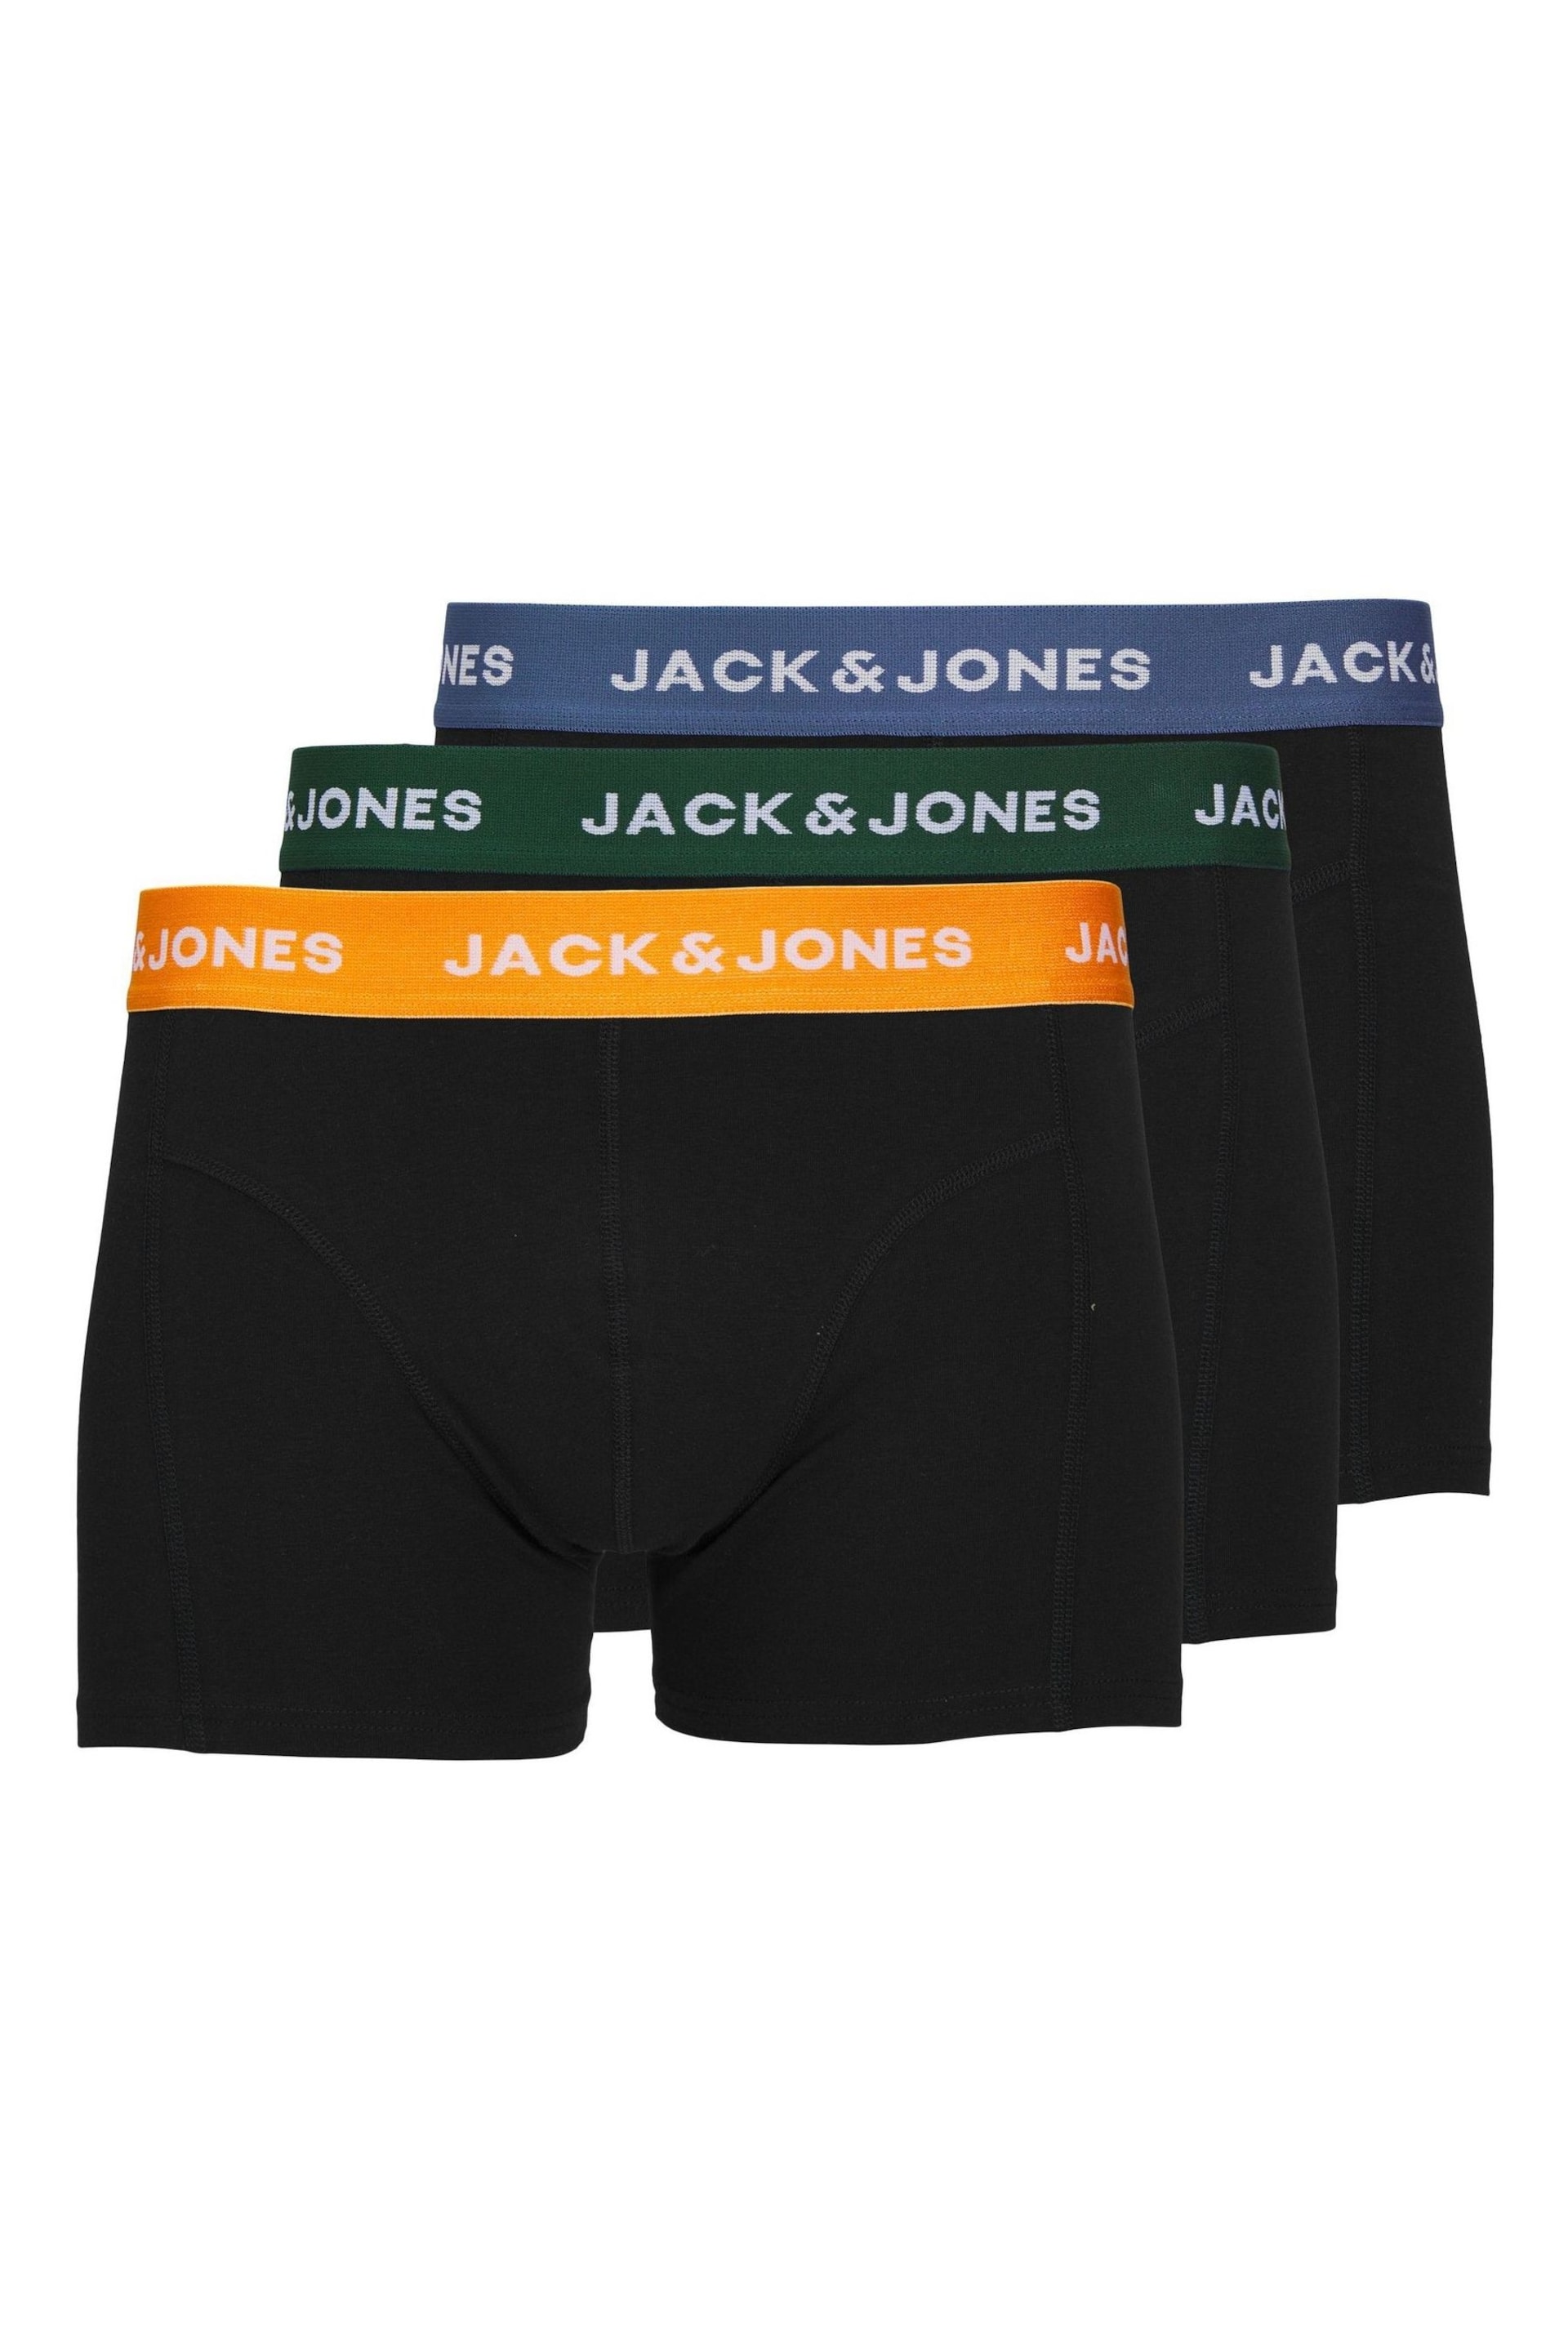 JACK & JONES Navy Black Logo Boxers 3 Pack - Image 6 of 6